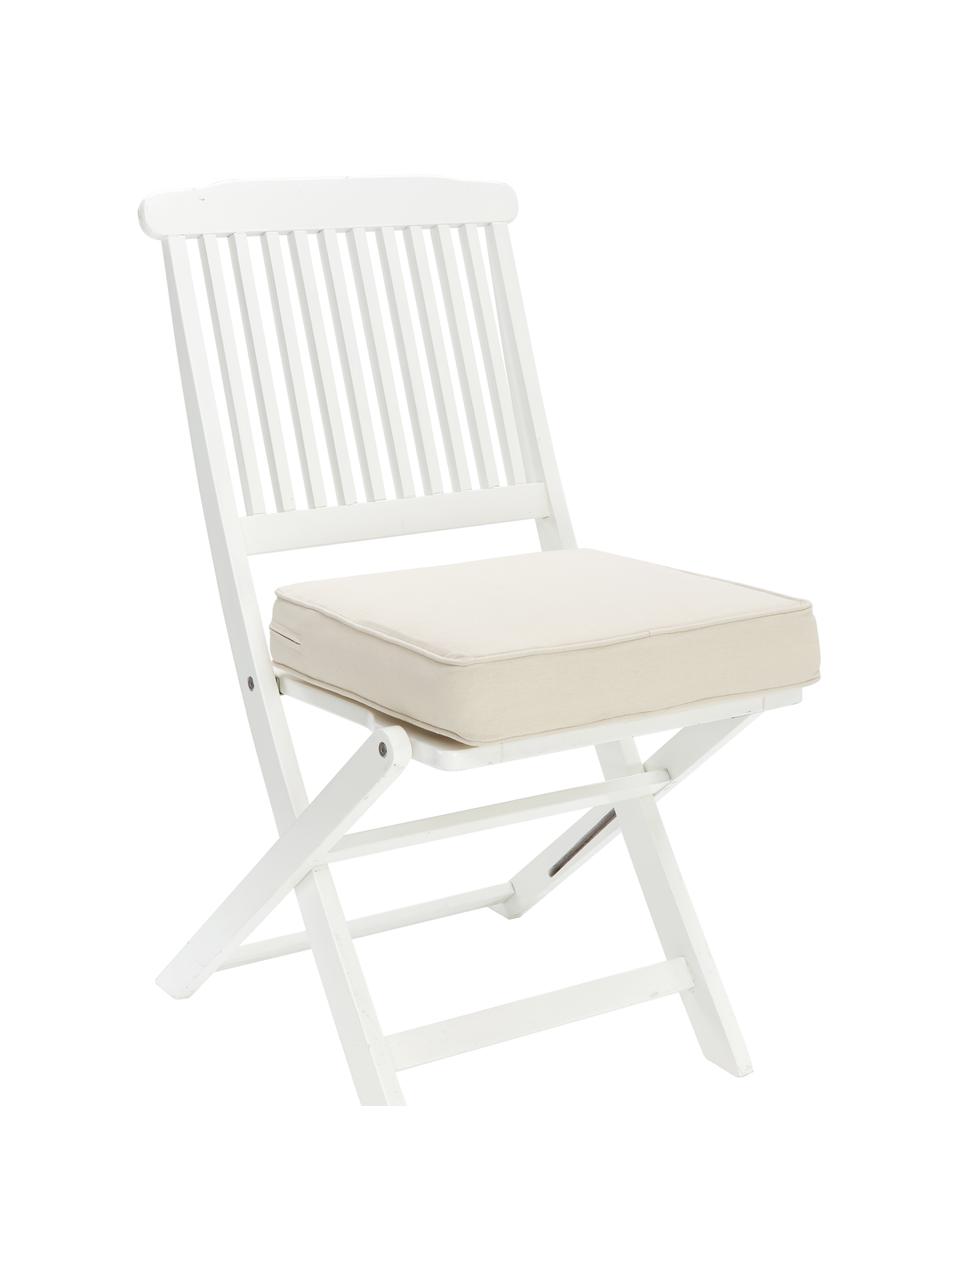 Cojín para silla alto de algodón Zoey, Funda: 100% algodón, Beige, An 40 x L 40 cm